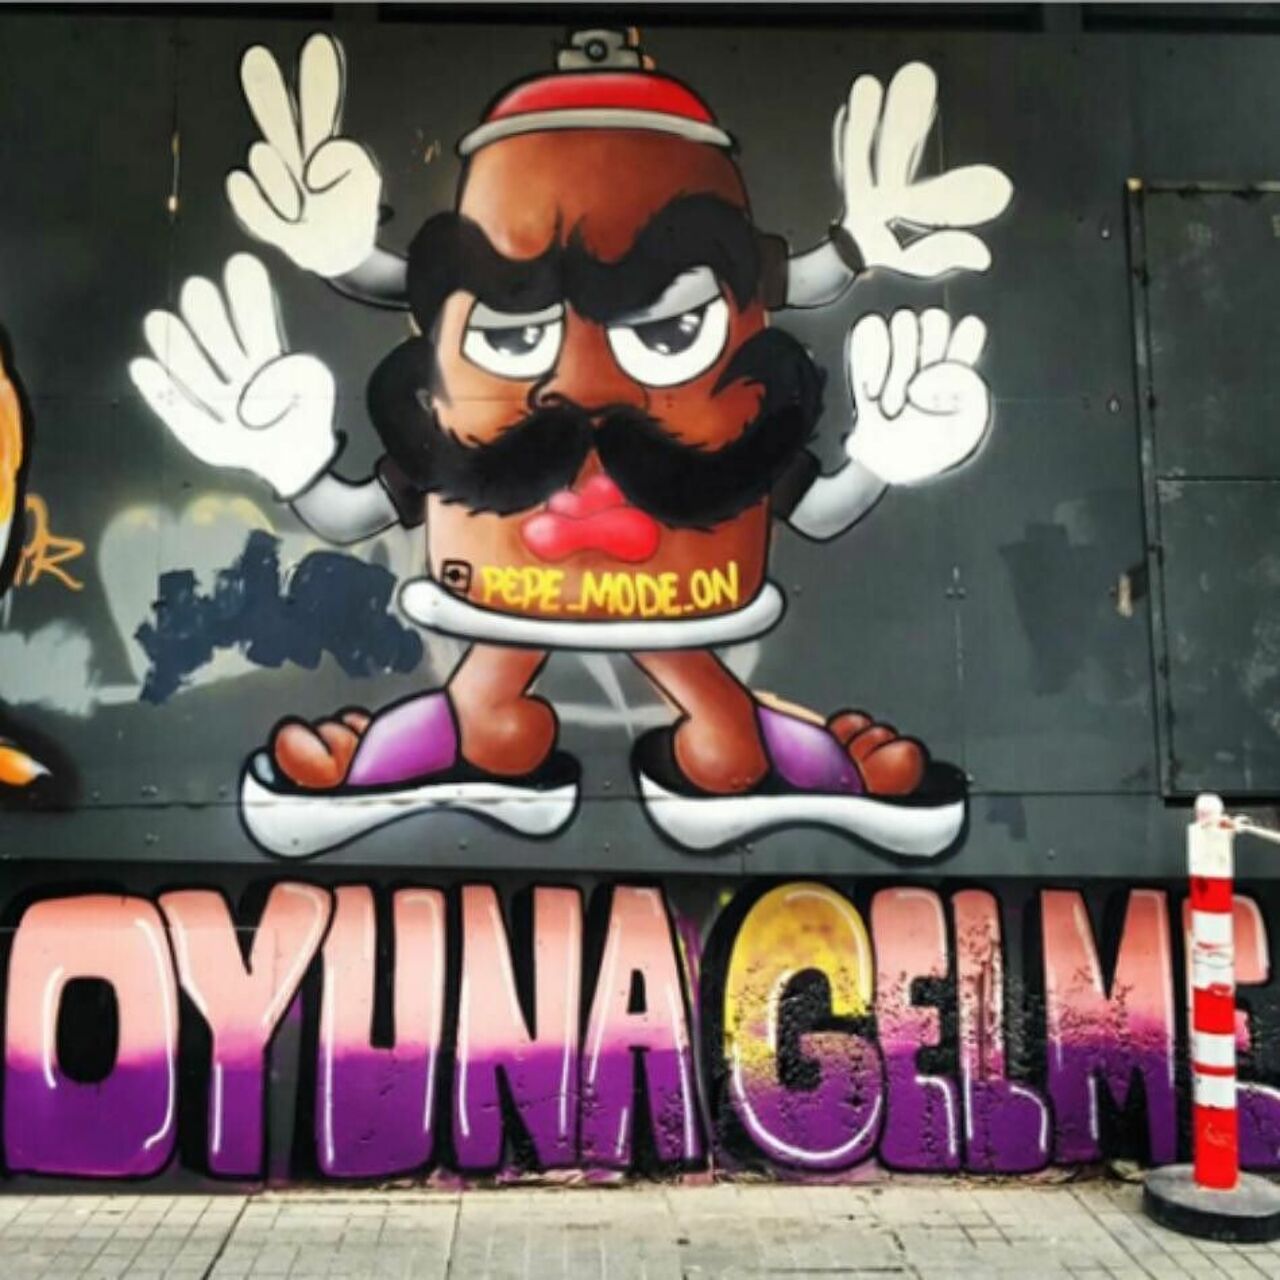 Oyuna gelme!!! #street #streetart #streetartistanbul #graffitiart #graffiti #oyunagelme #istiklalcaddesi by pepe_mo… https://t.co/WY2rVOce4k